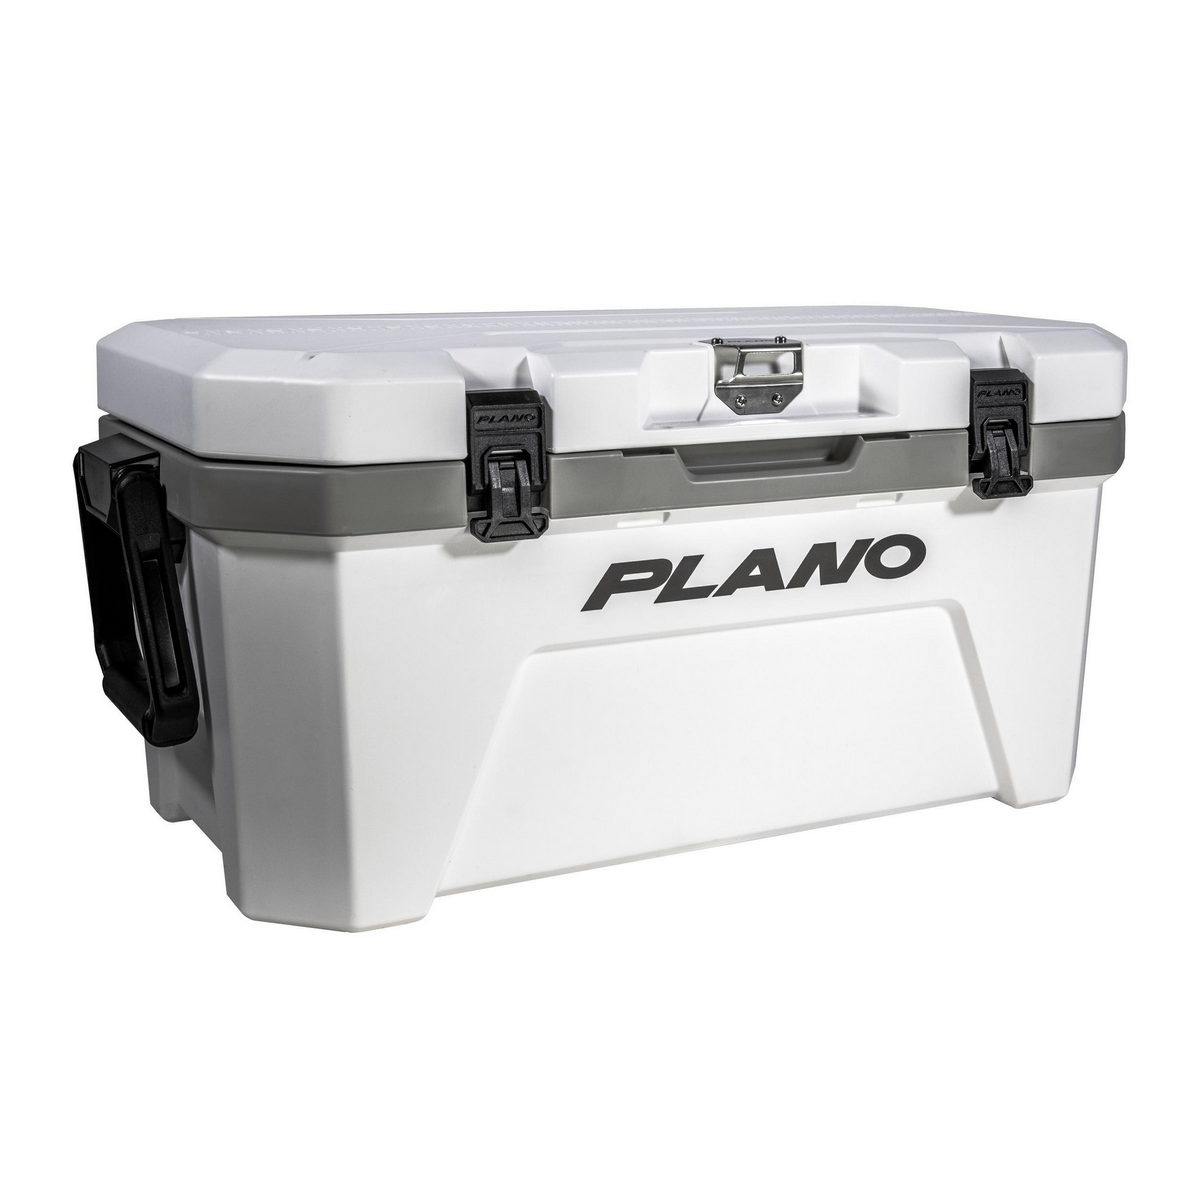 PLANO Frost Külbox 32 Liter PLAC3200 Cooler 32 QT